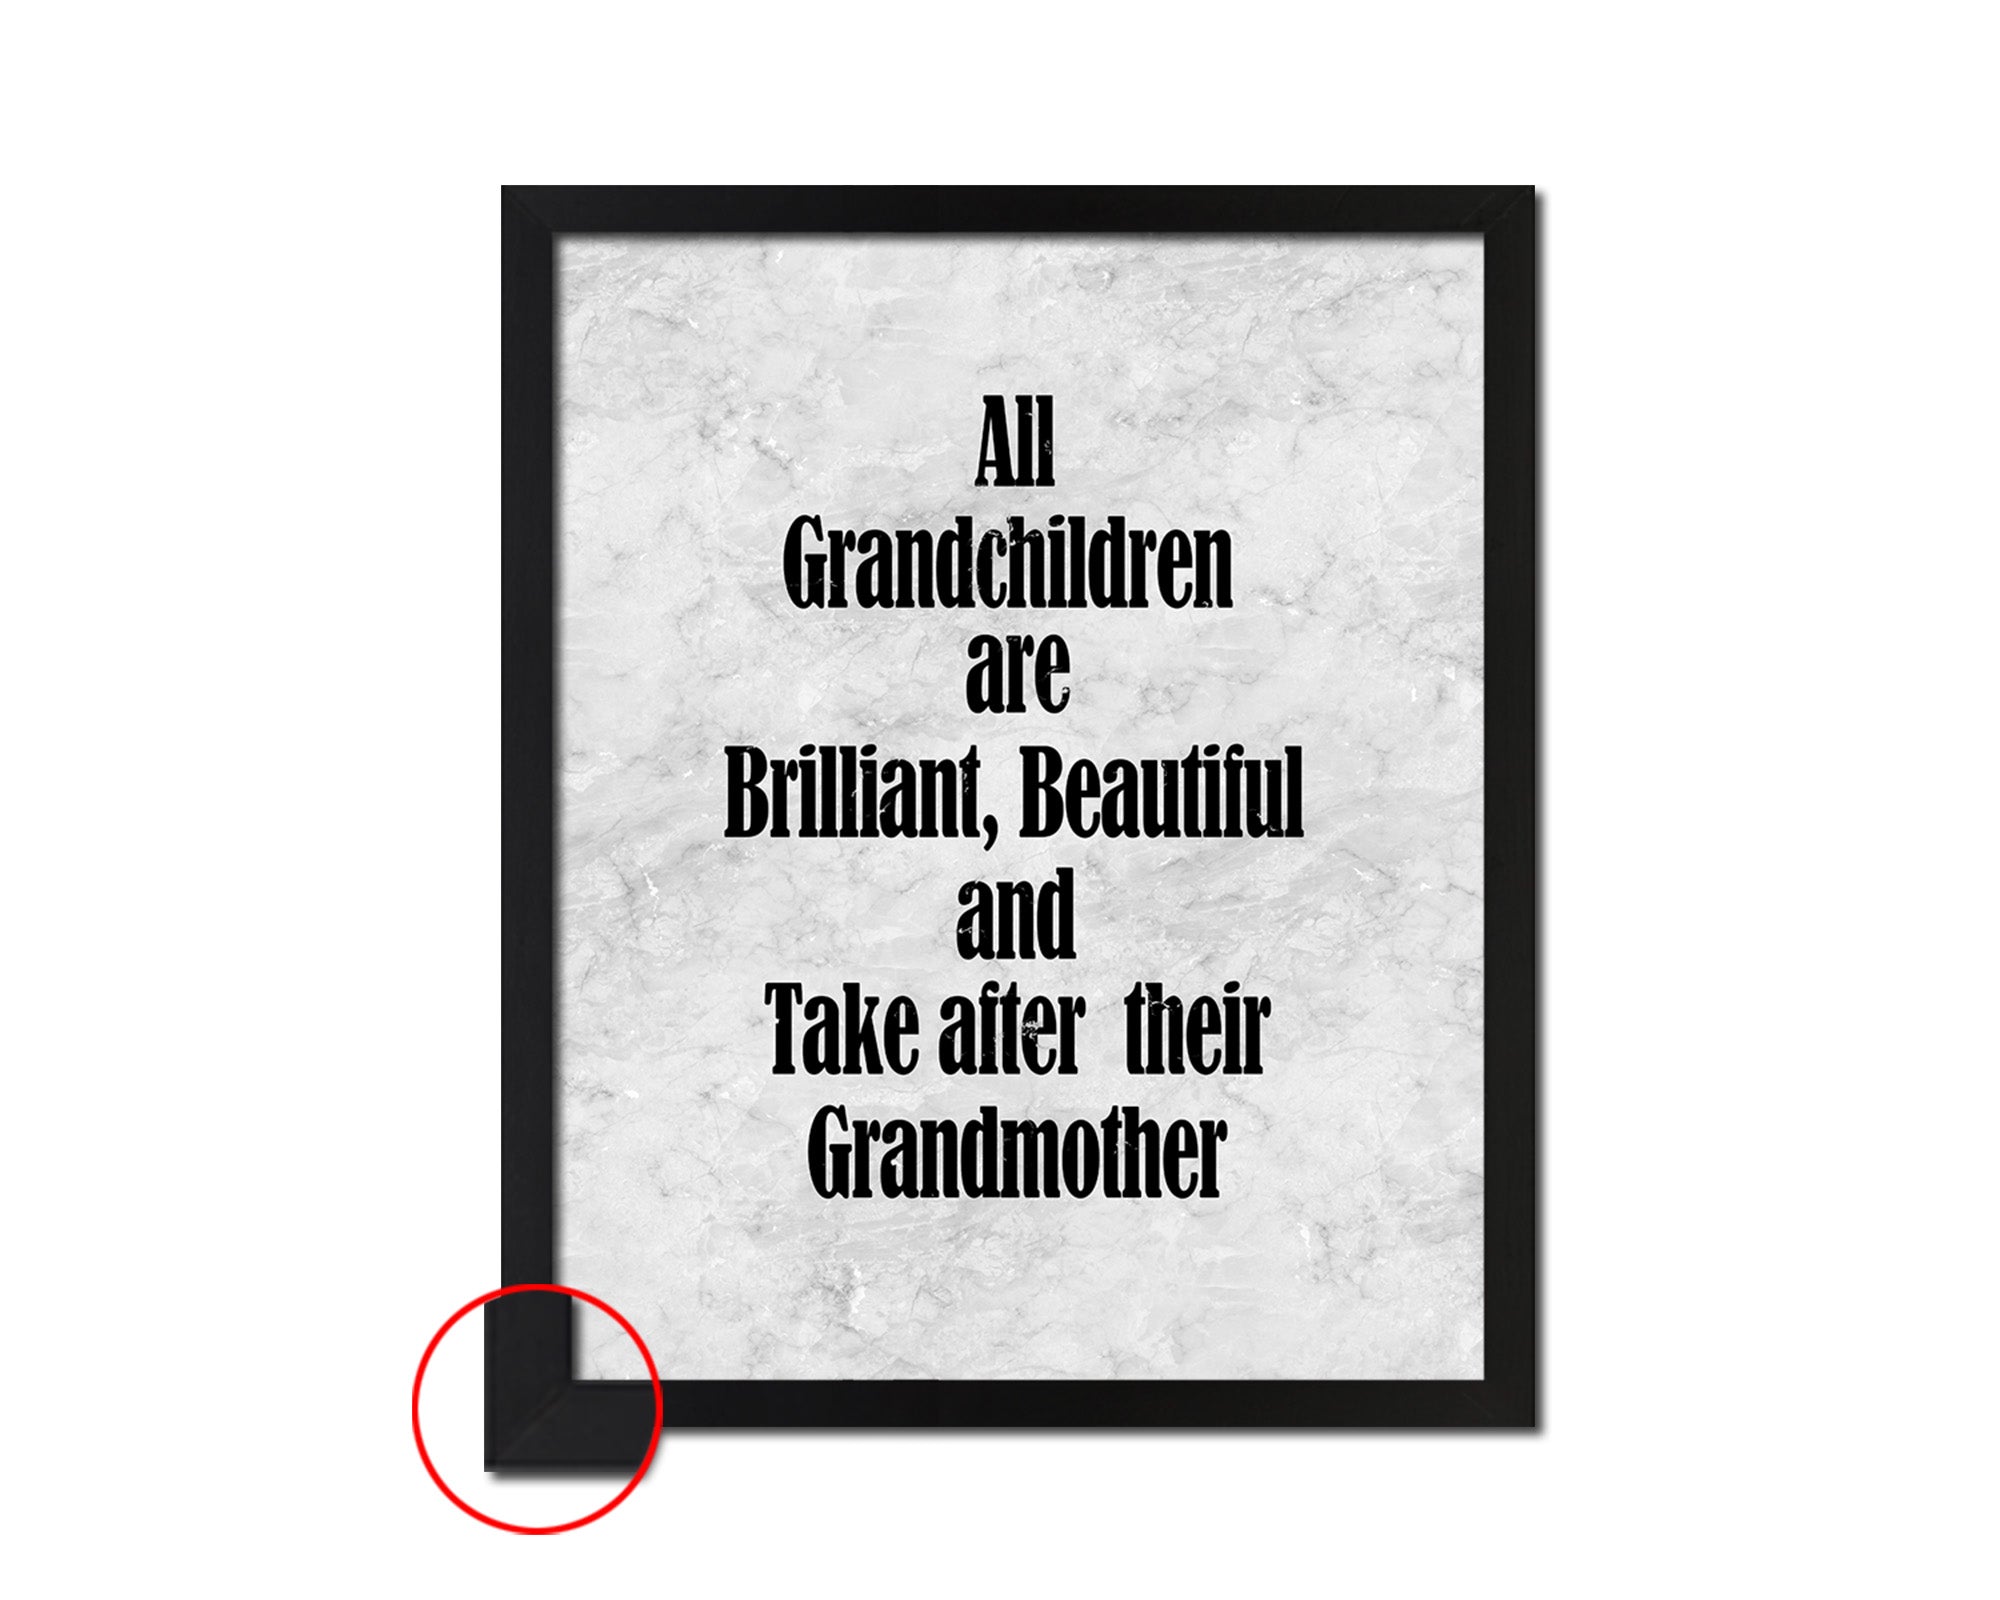 All grandchildren are billiant beautiful Quote Framed Print Wall Art Decor Gifts